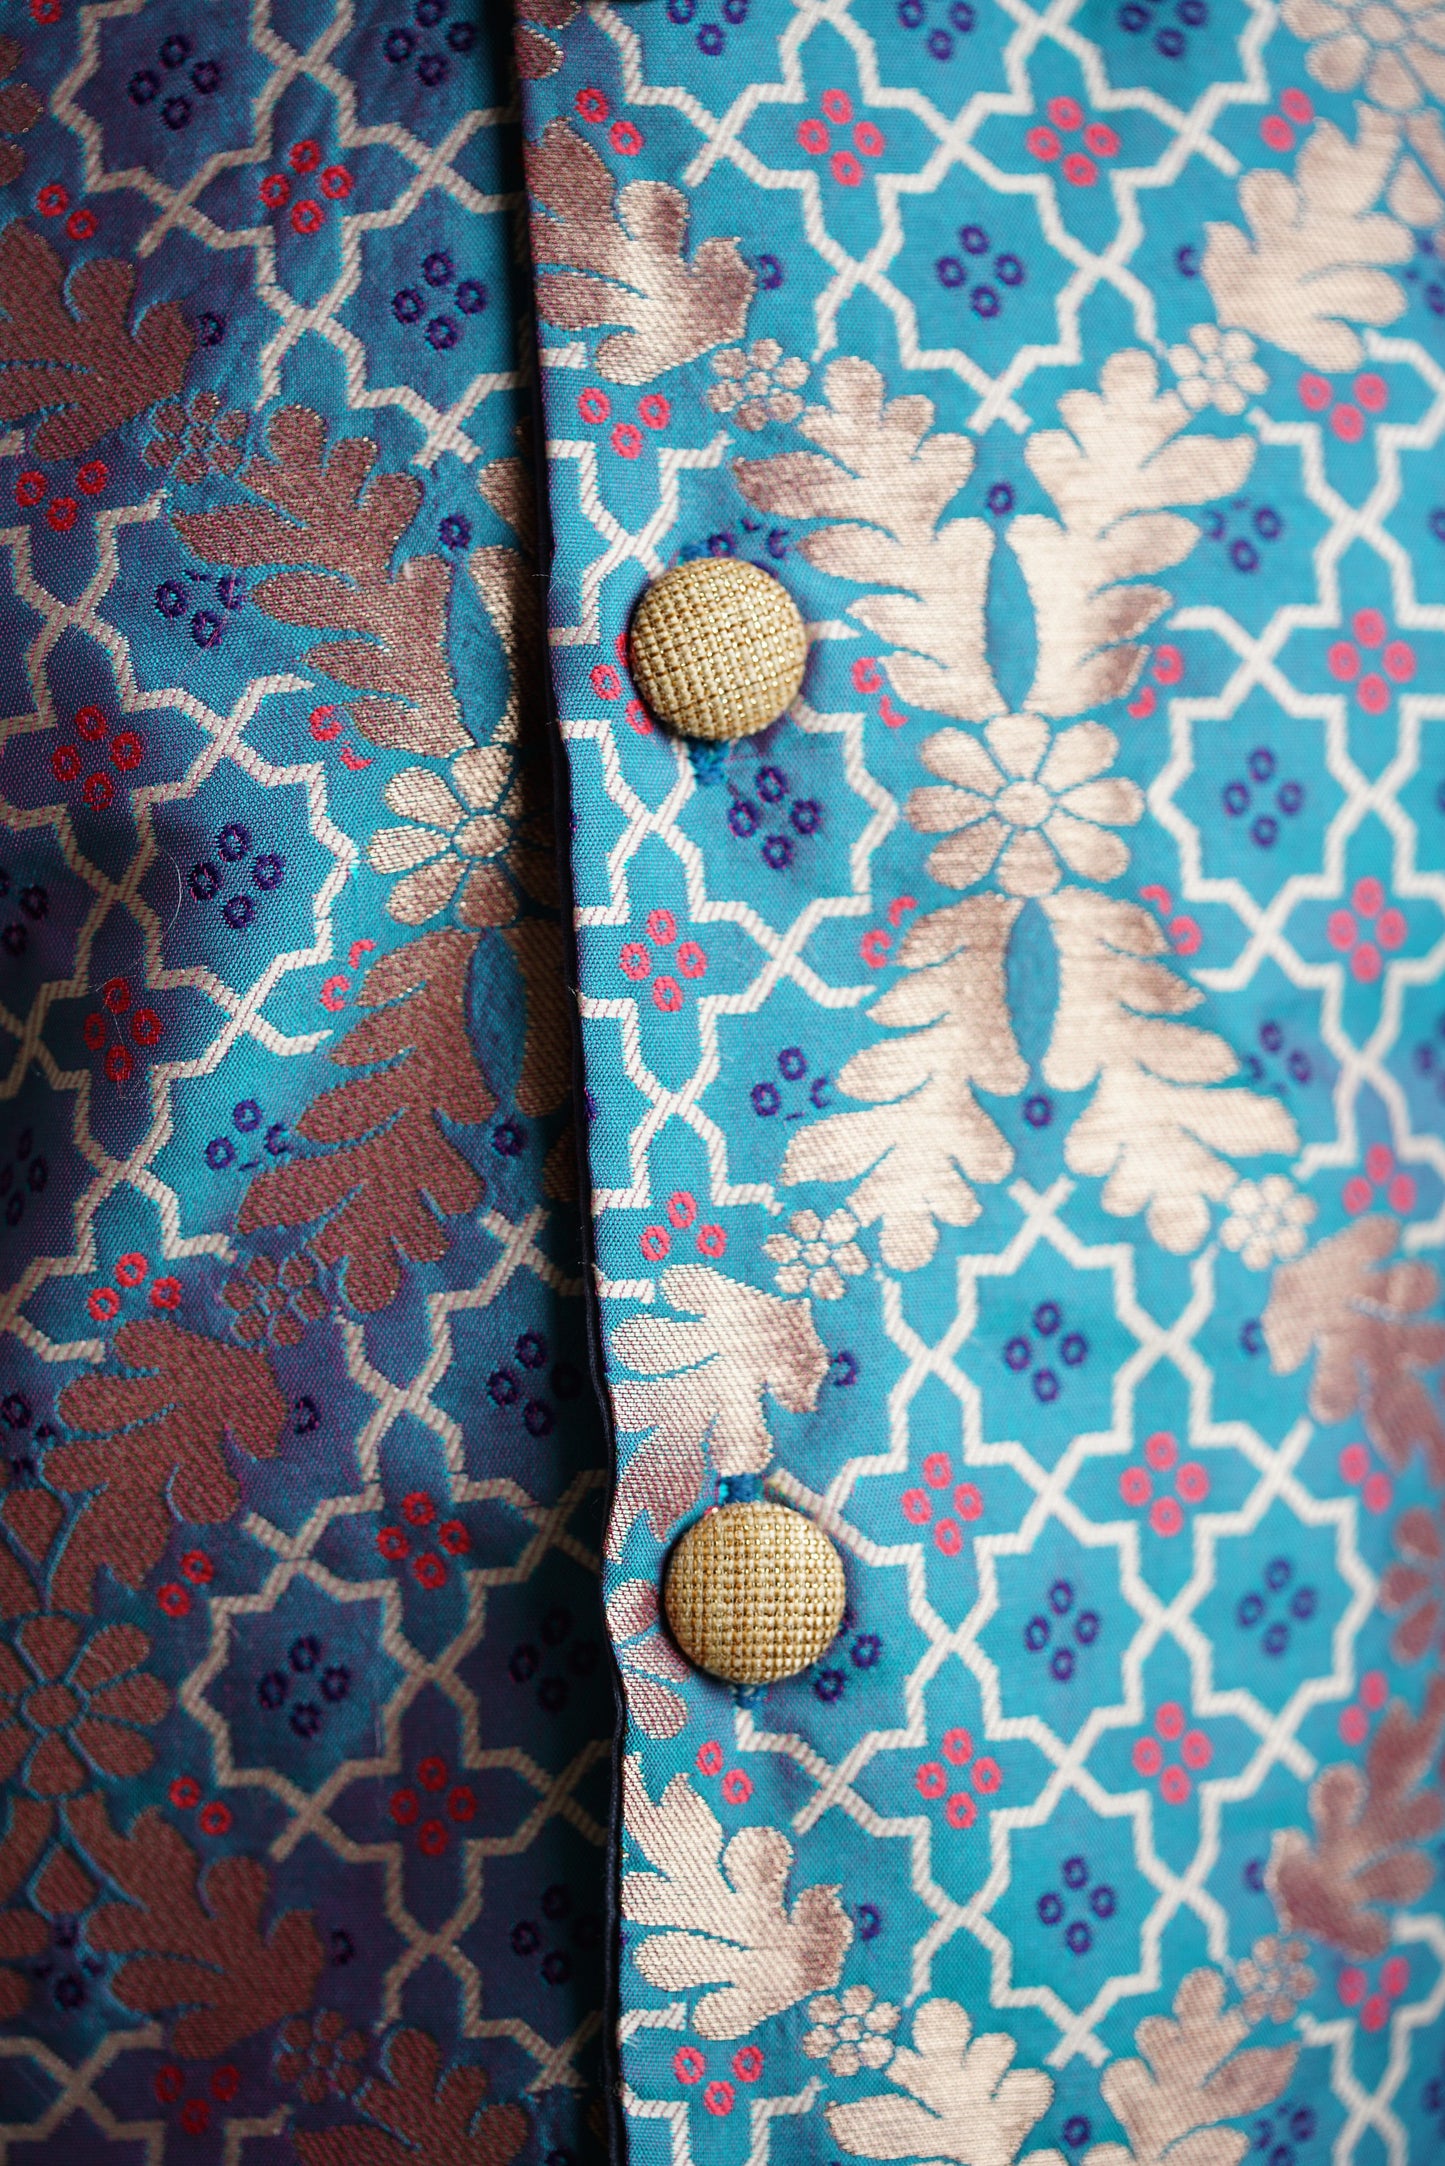 aqua blue traditional ethnic brocade printed silk cotton kurta pyjama salwar suit pajama churidar set sherwani jacket for baby boy kids 